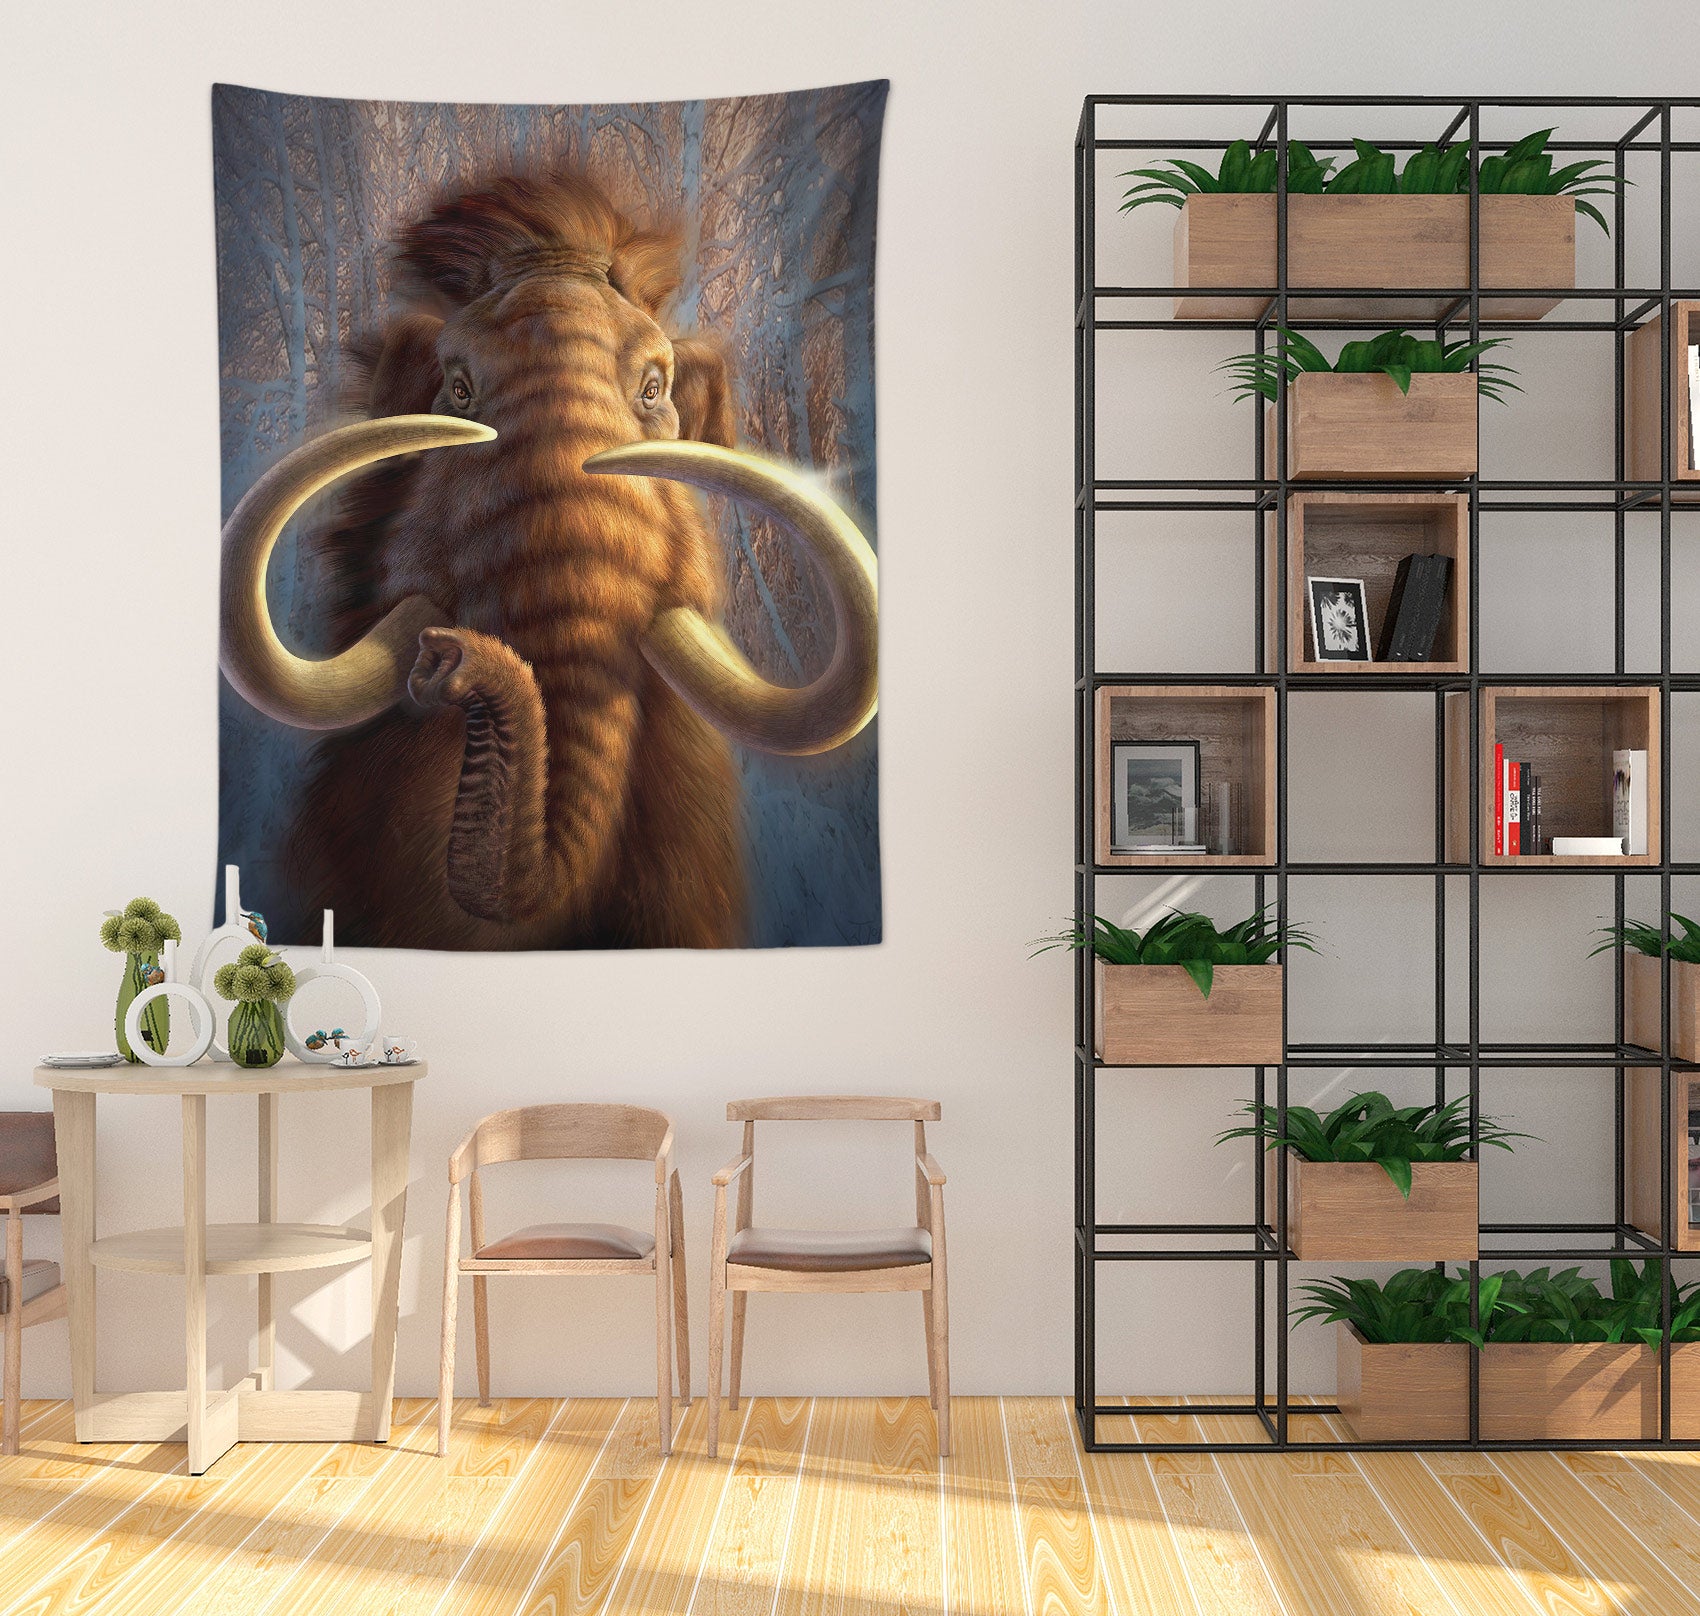 3D Mammoth 111153 Jerry LoFaro Tapestry Hanging Cloth Hang